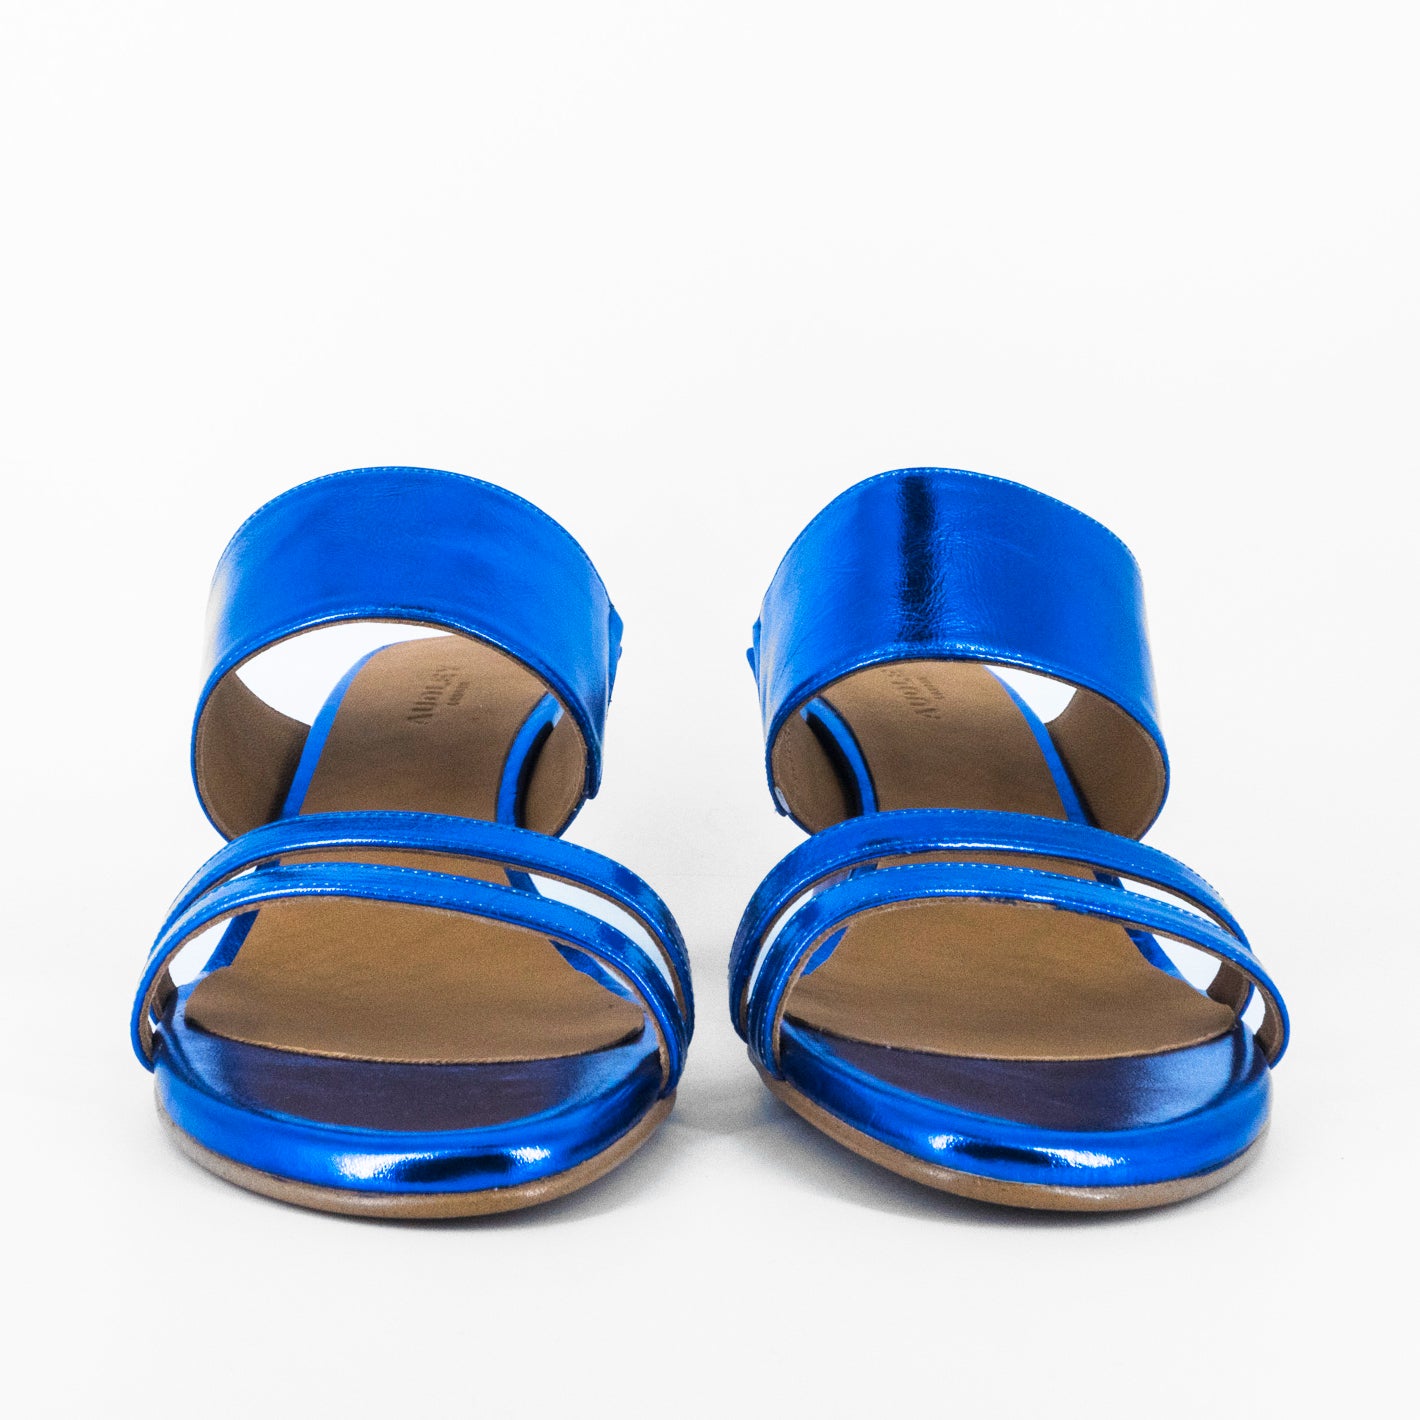 Metallic Leisure Flat Sandals